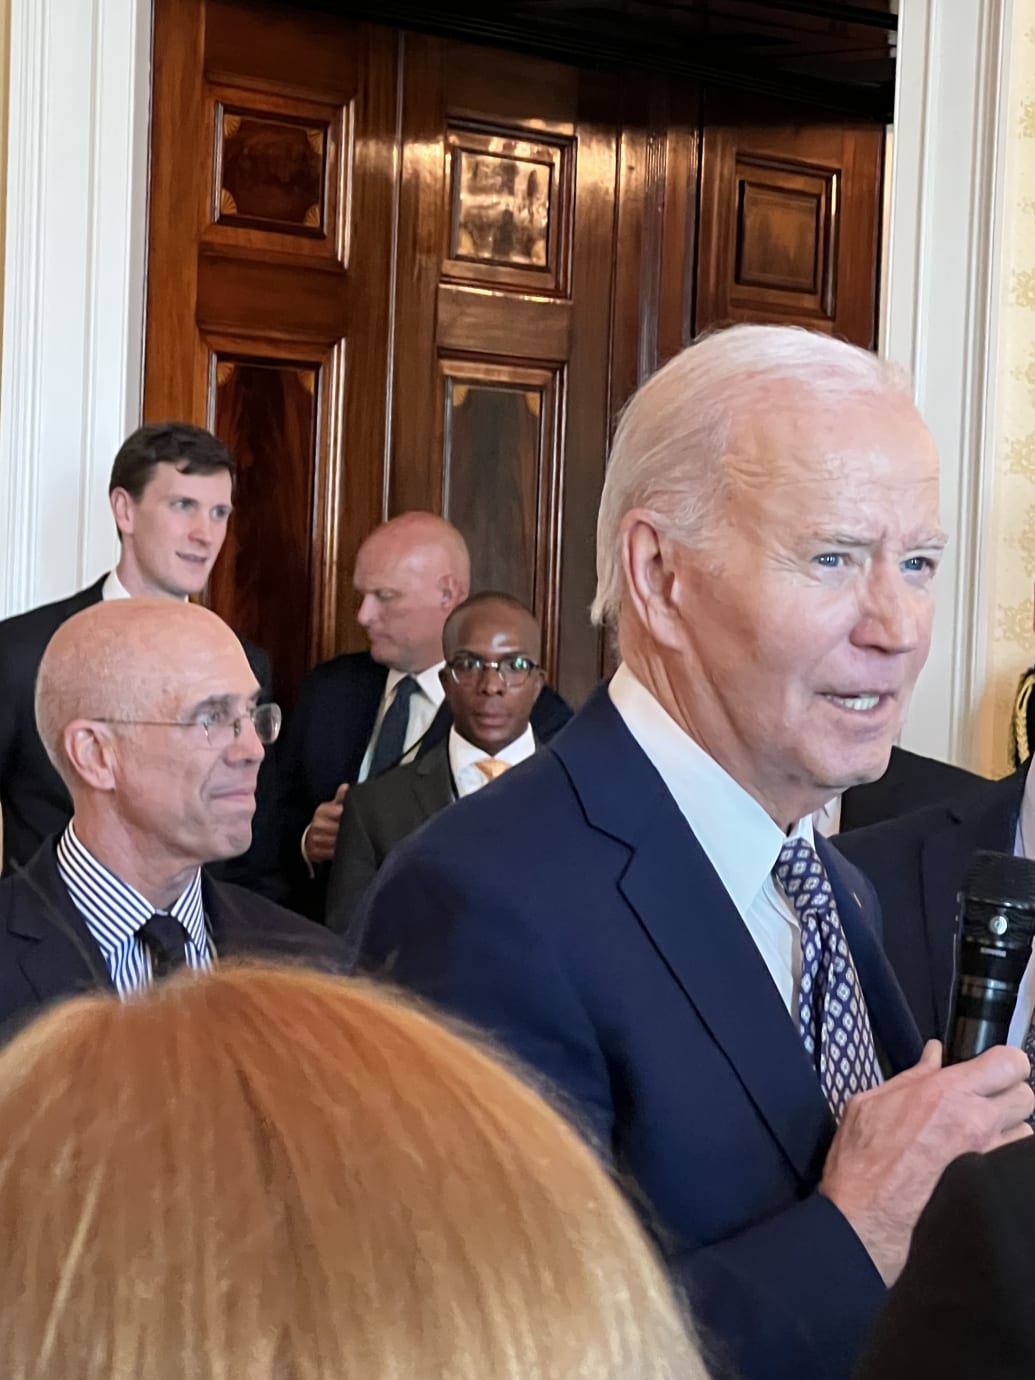 Joe Biden speaking into a microphone with Jeffrey Katzenberg behind him, in a White House room.